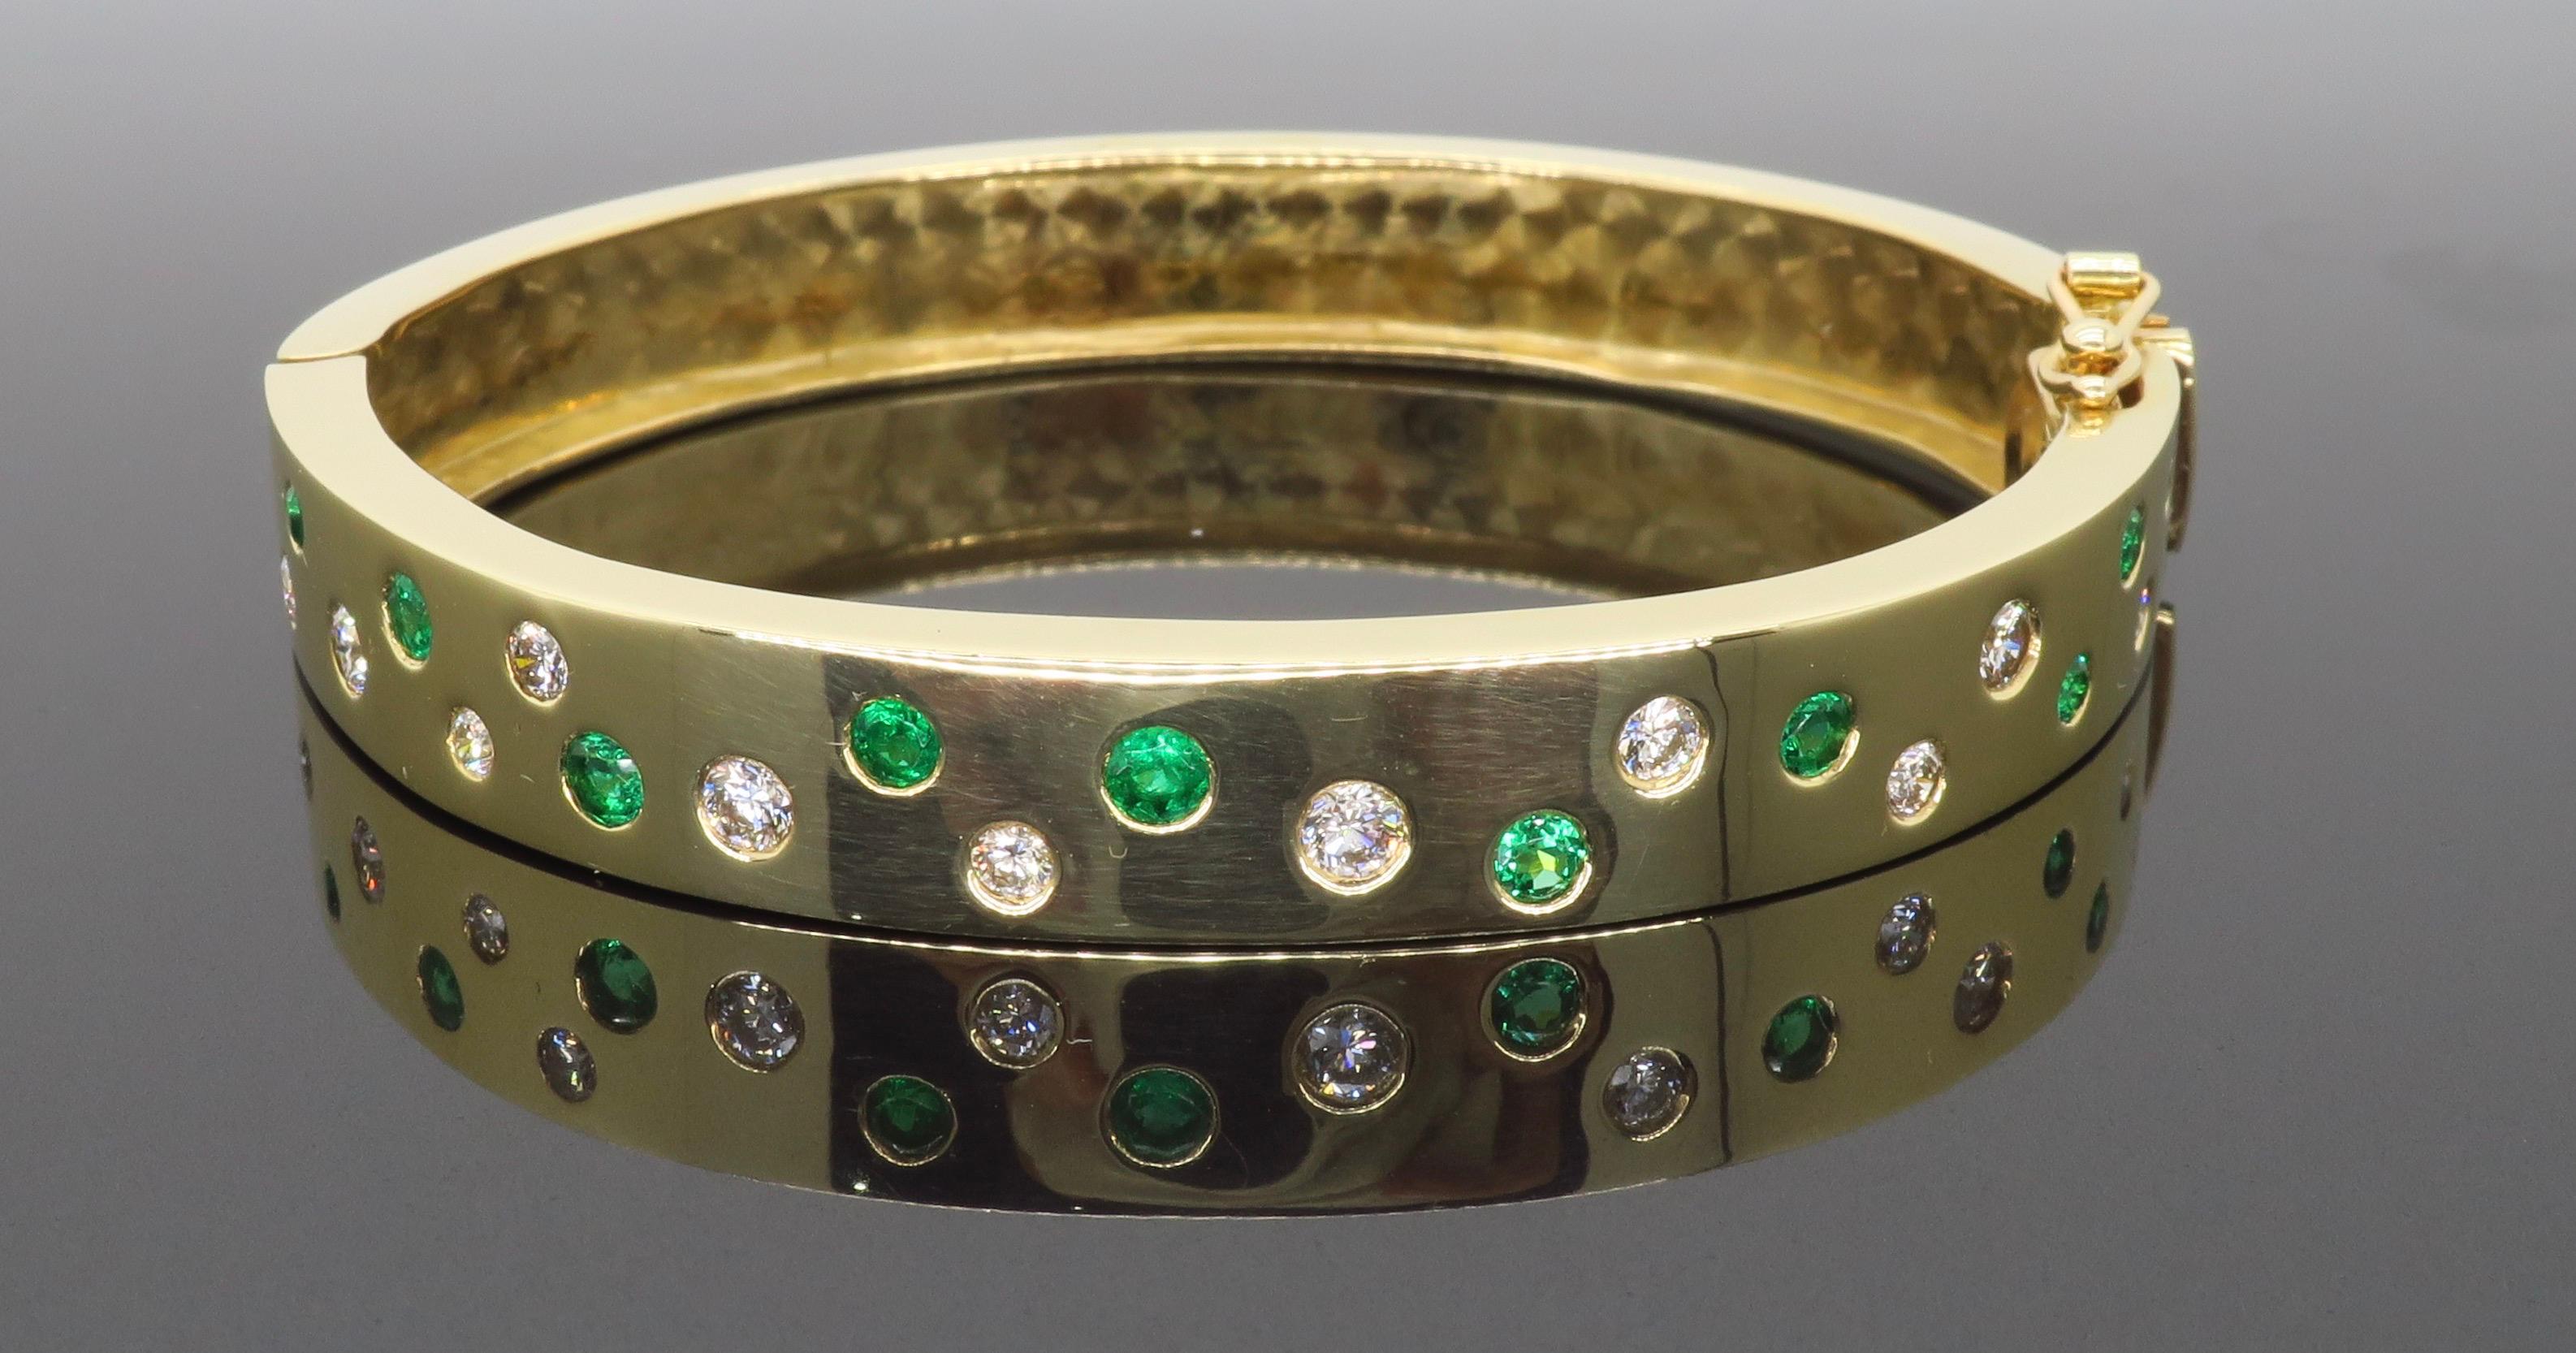 Custom made “bubble” style diamond & emerald bangle bracelet made in 14k yellow gold. 

Diamond Carat Weight: Approximately 1.00CTW
Diamond Cut: Round Brilliant Cut Diamonds
Color: Average G-H
Clarity: Average VS
Metal: 14k yellow